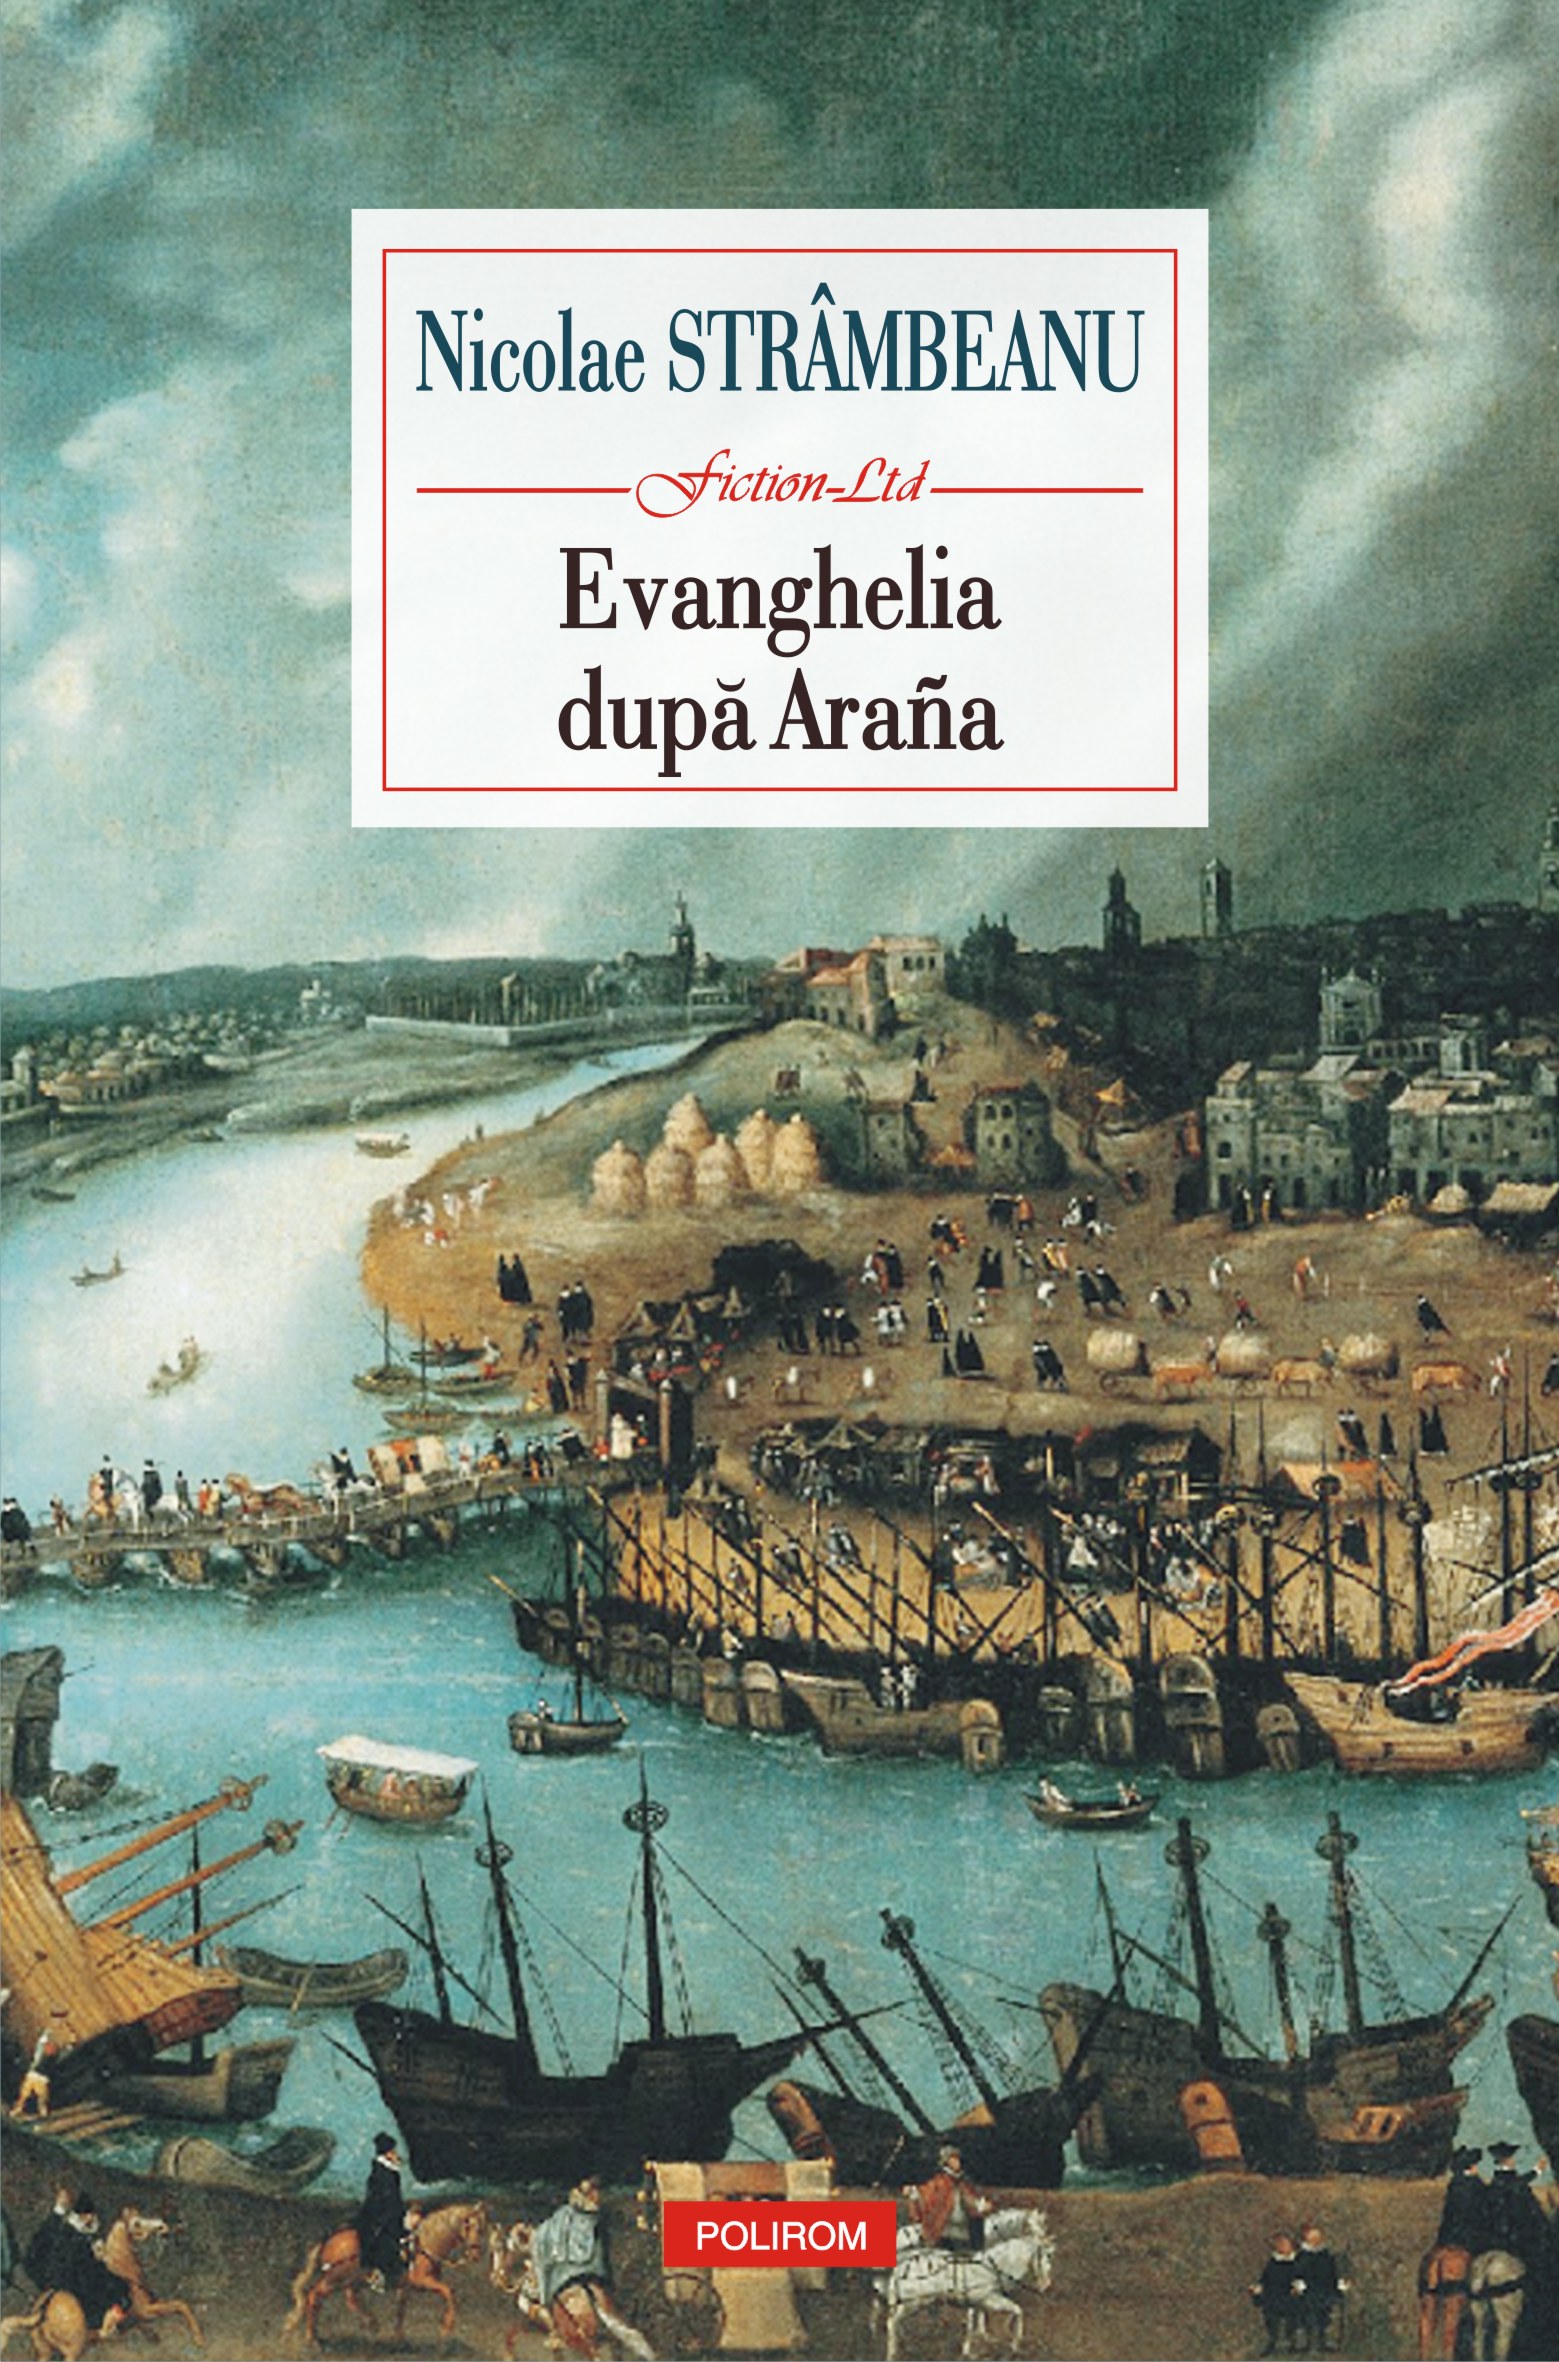 eBook Evanghelia dupa Arana - Nicolae Strambeanu